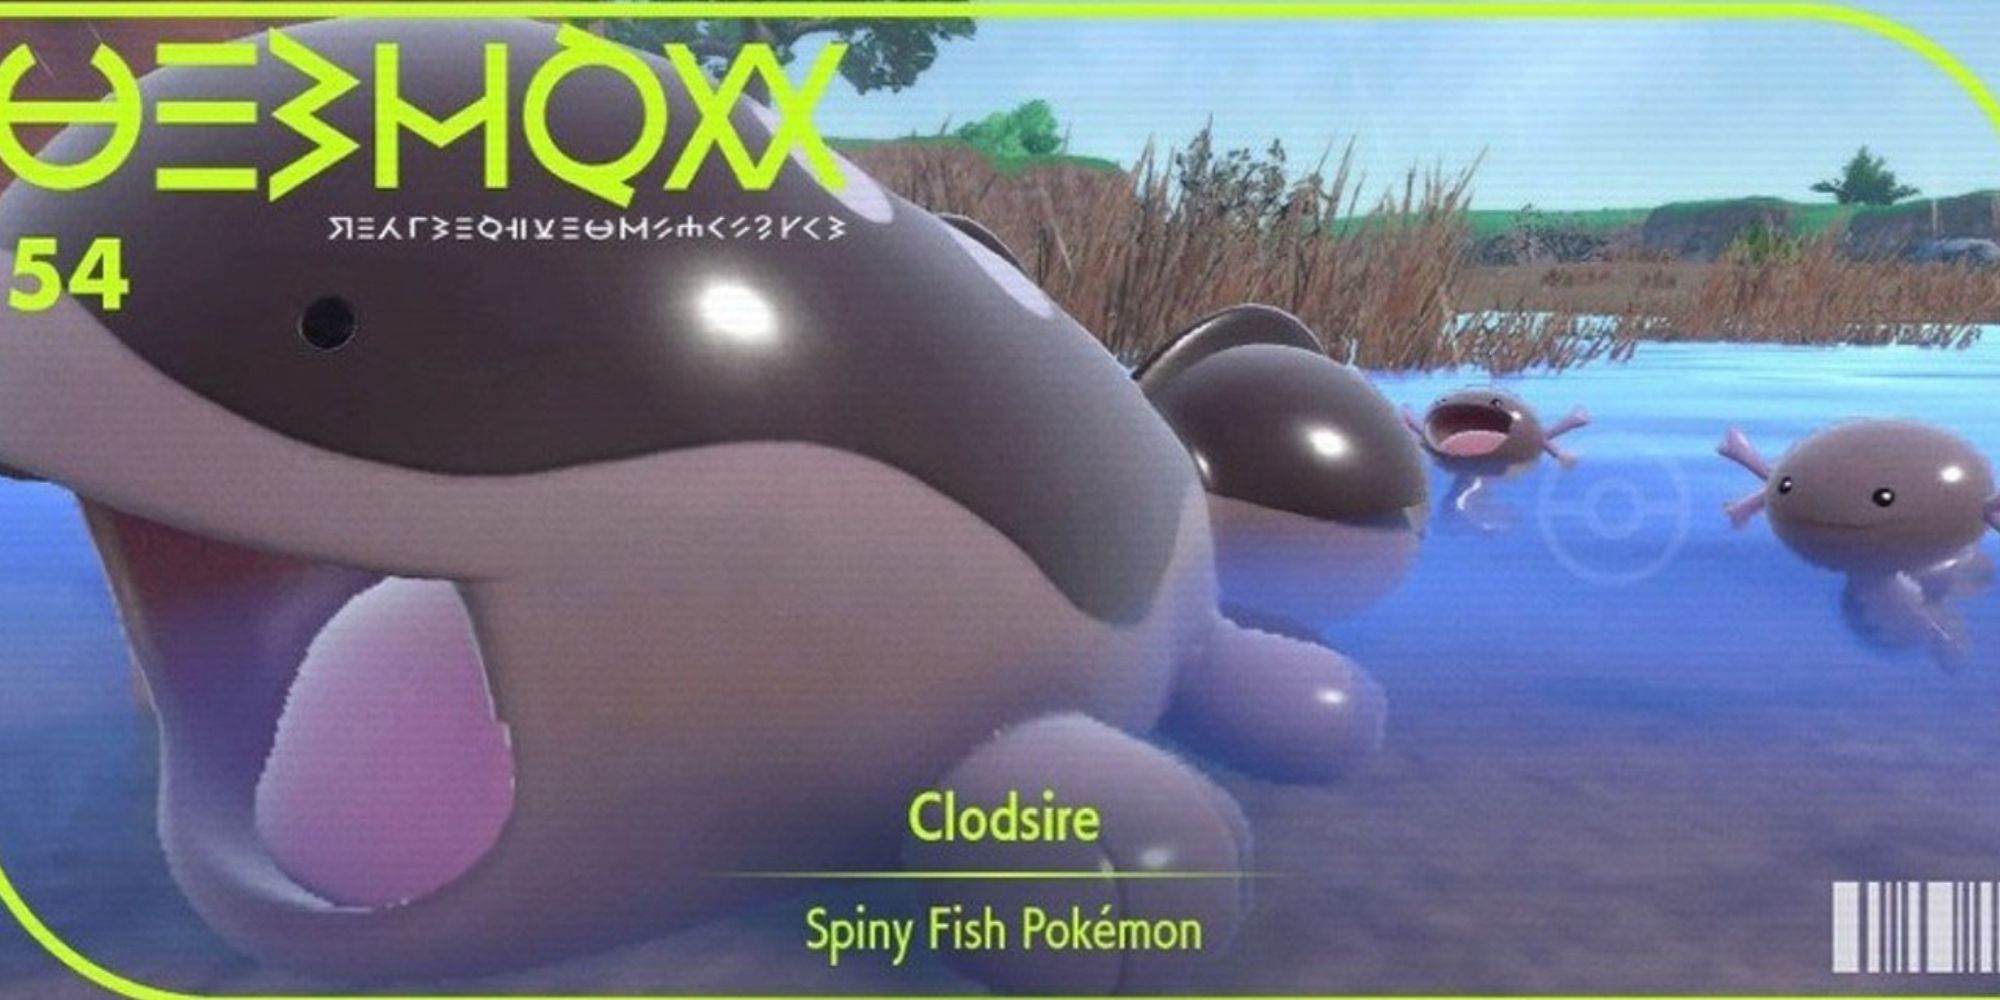 A Pokédex photo showing a new Generation 9 evolution of Paldean Wooper, Clodsire, the Spiny Fish Pokémon.